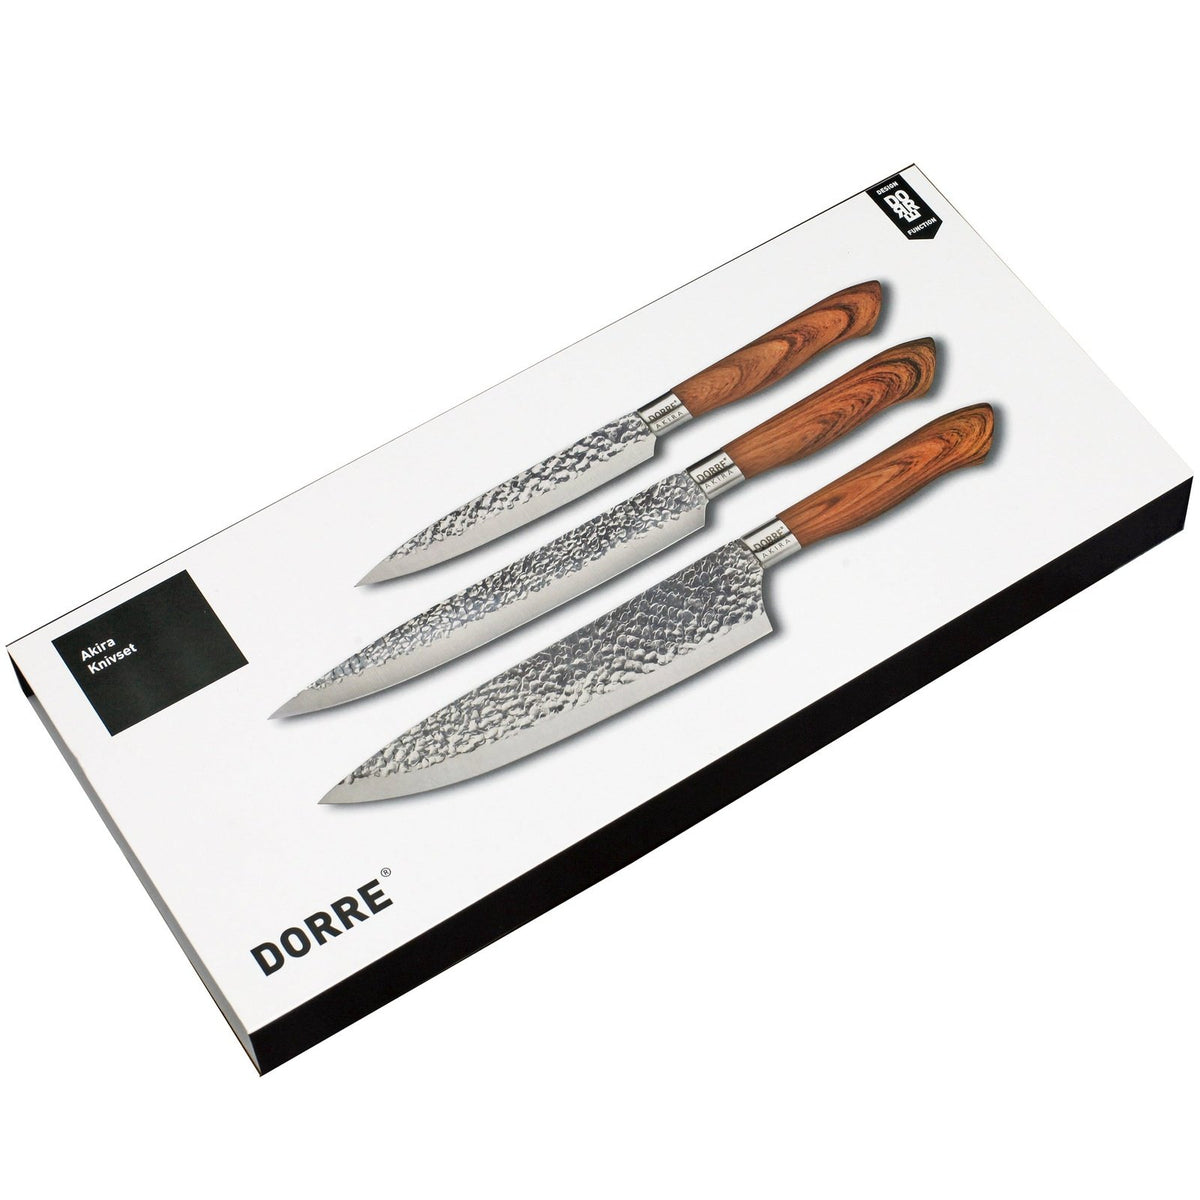 Dorre Akira Knife Set, 3 pieces